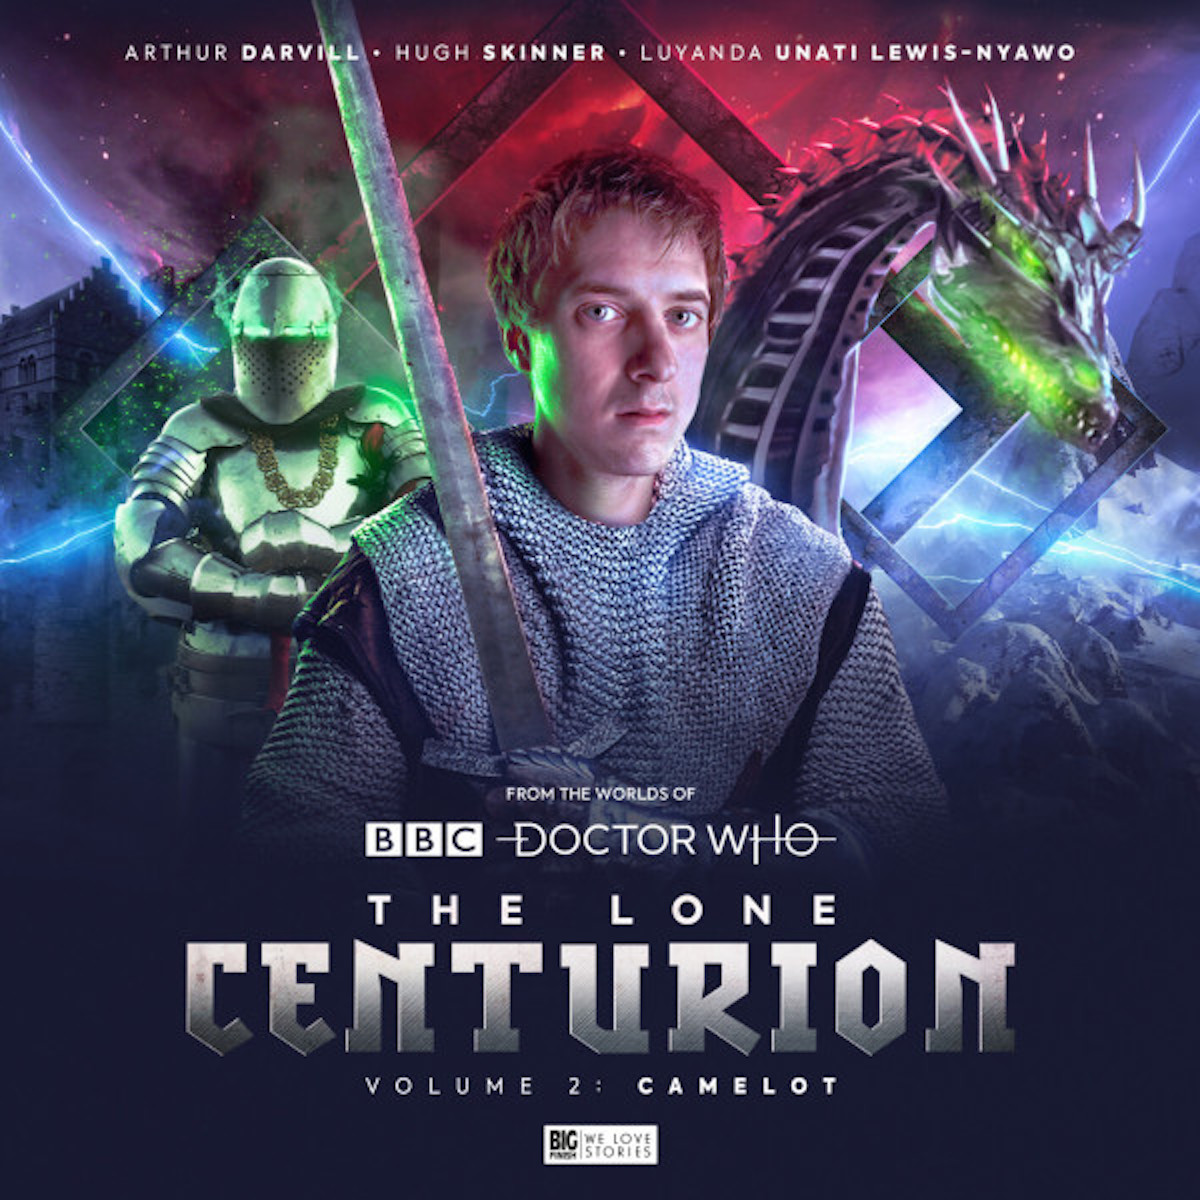 The Lone Centurion Volume 2 Camelot